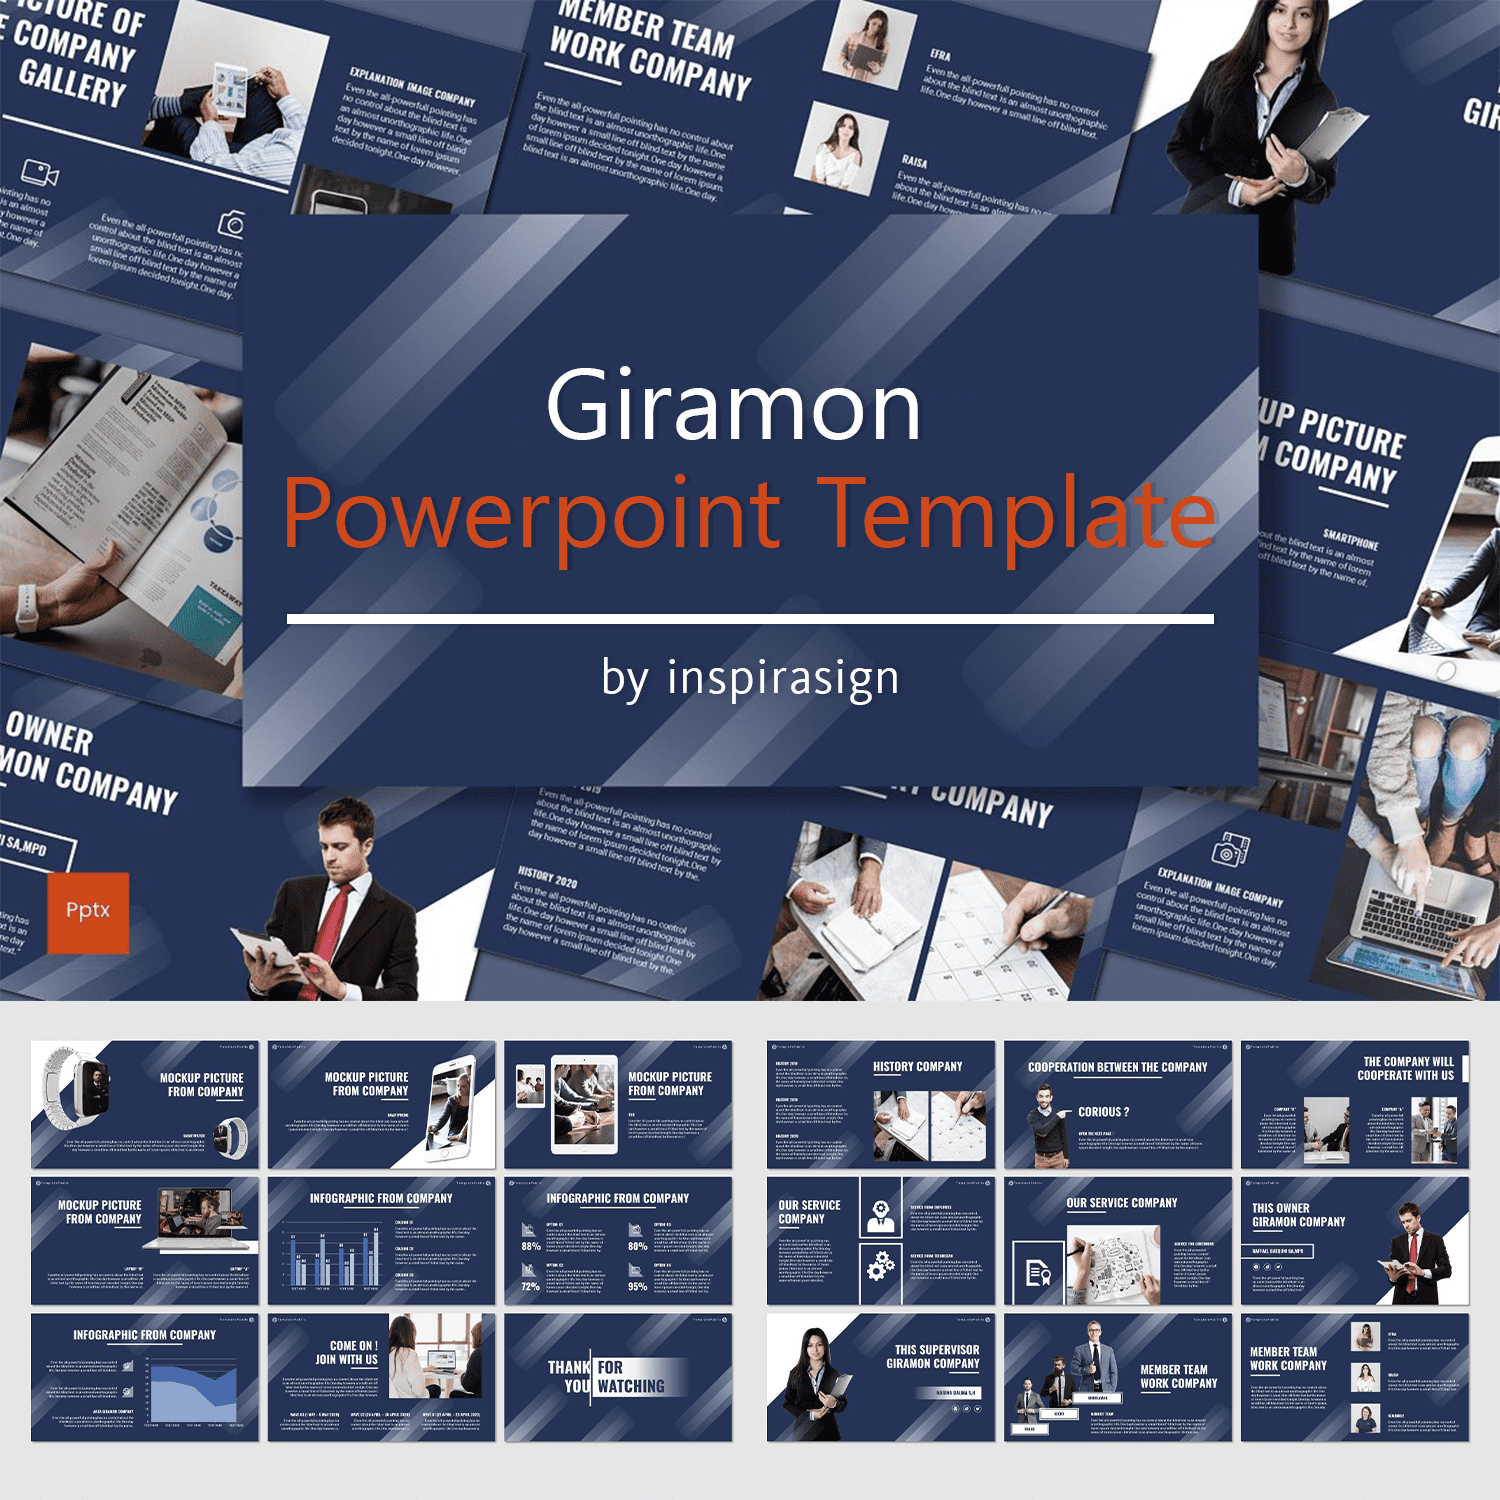 Giramon - PowerPoint Template cover image.